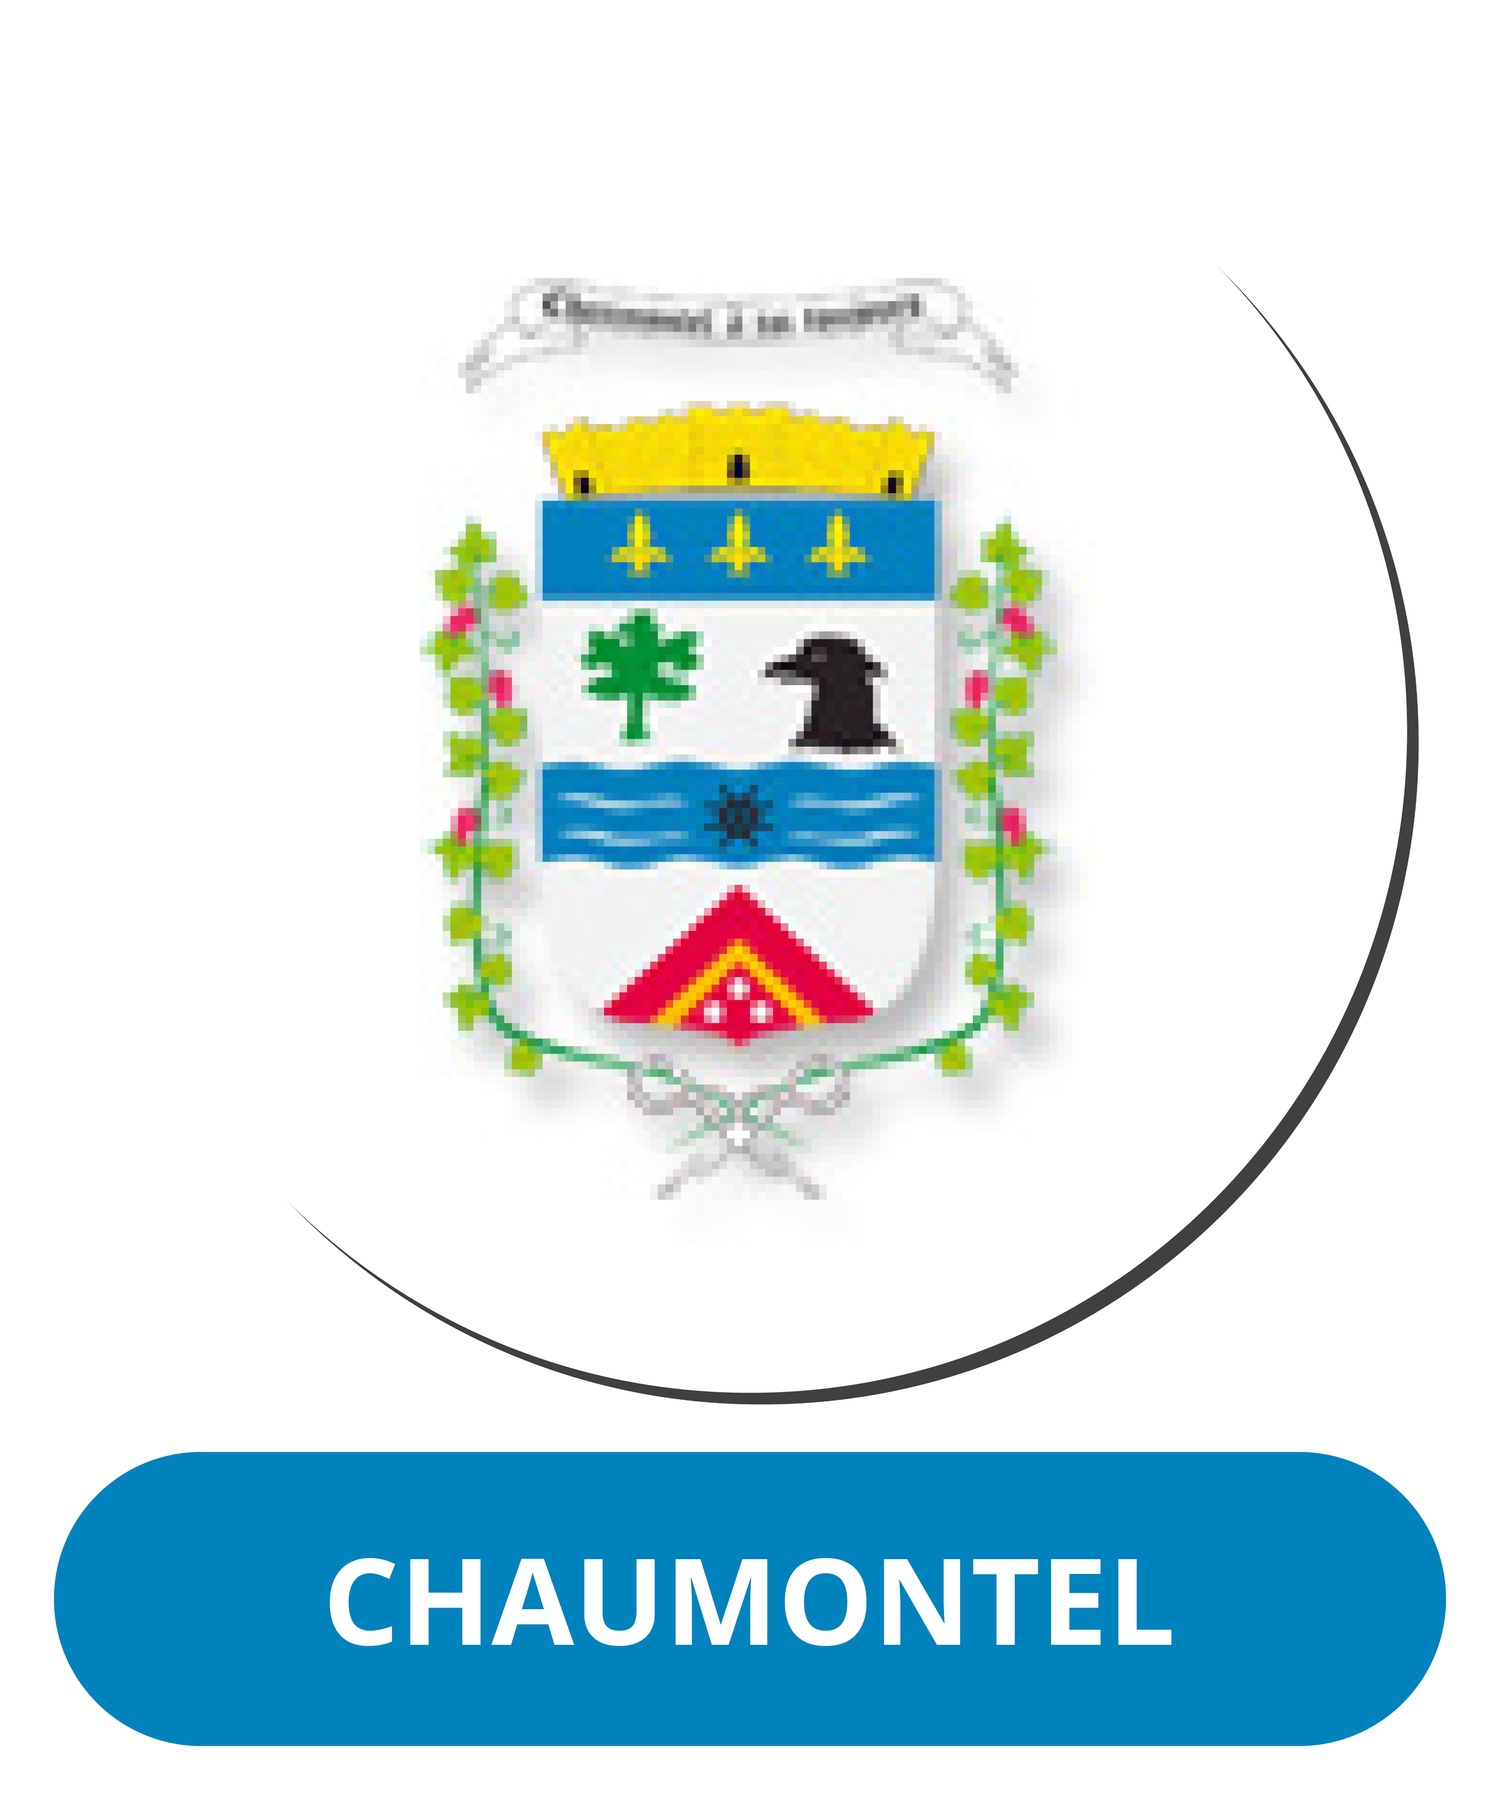 Chaumontel